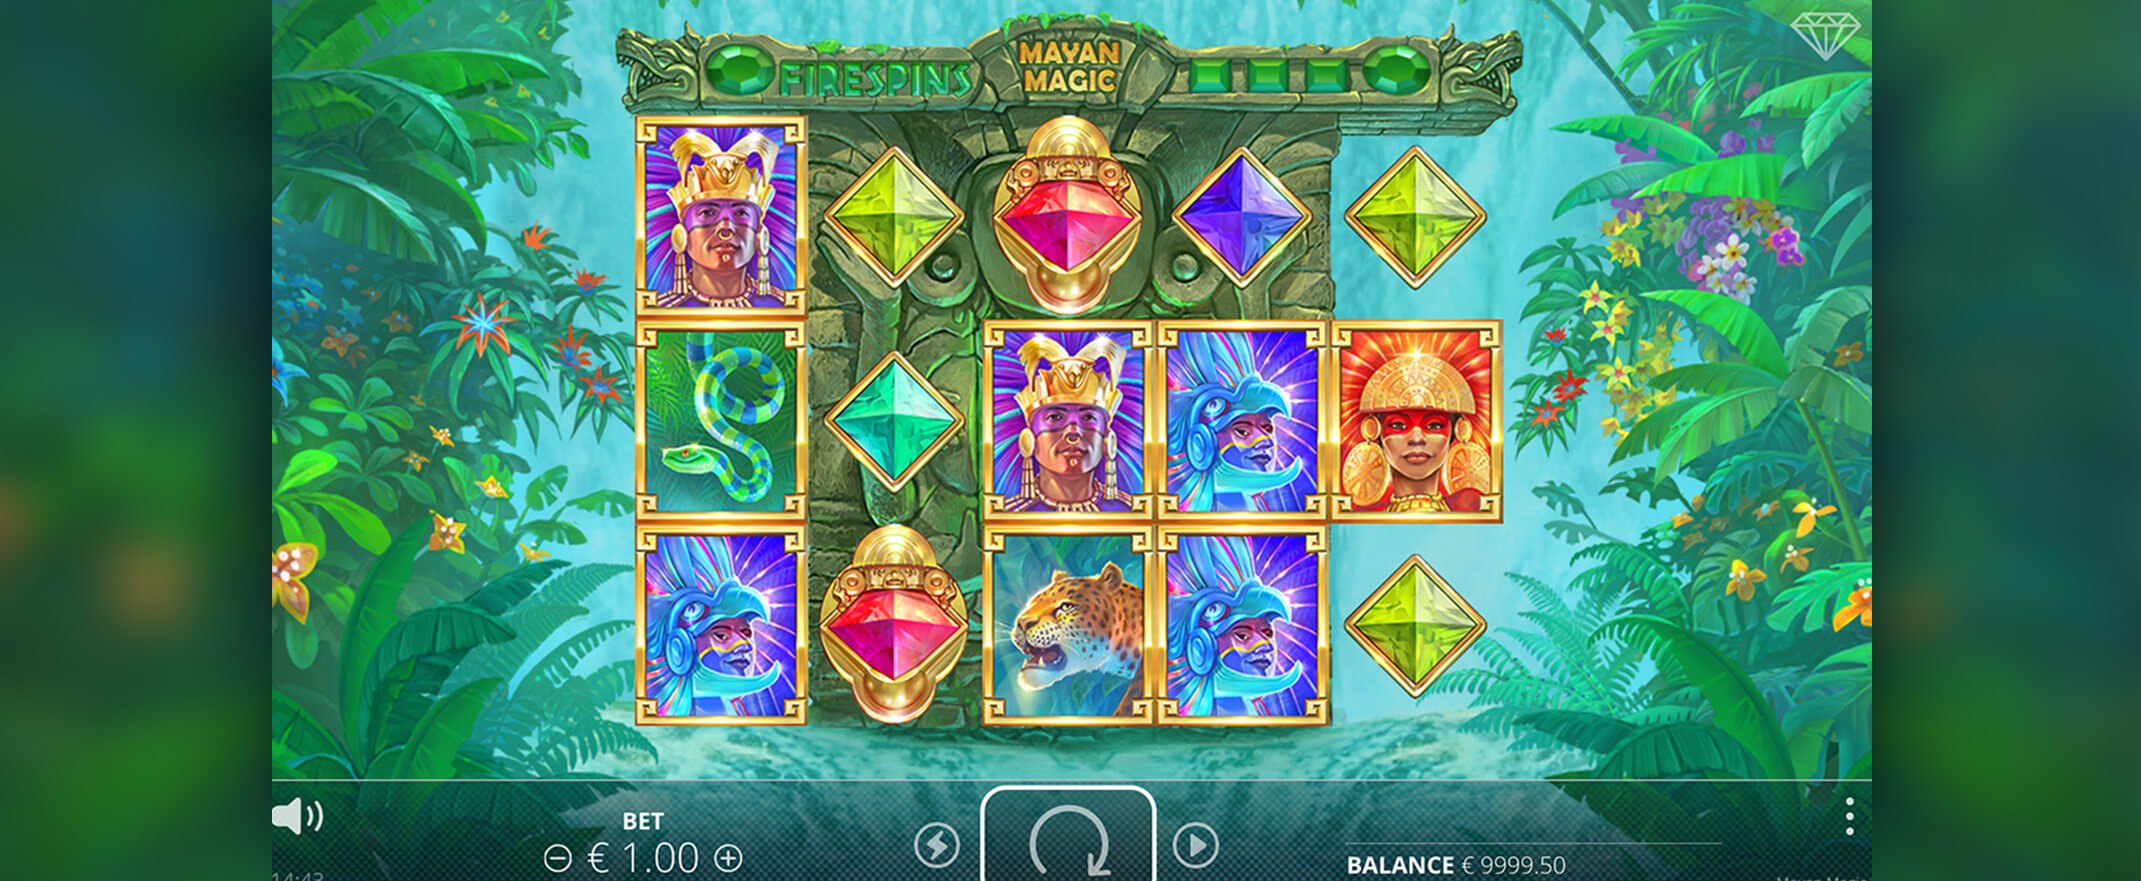 mayan magic spilleautomat